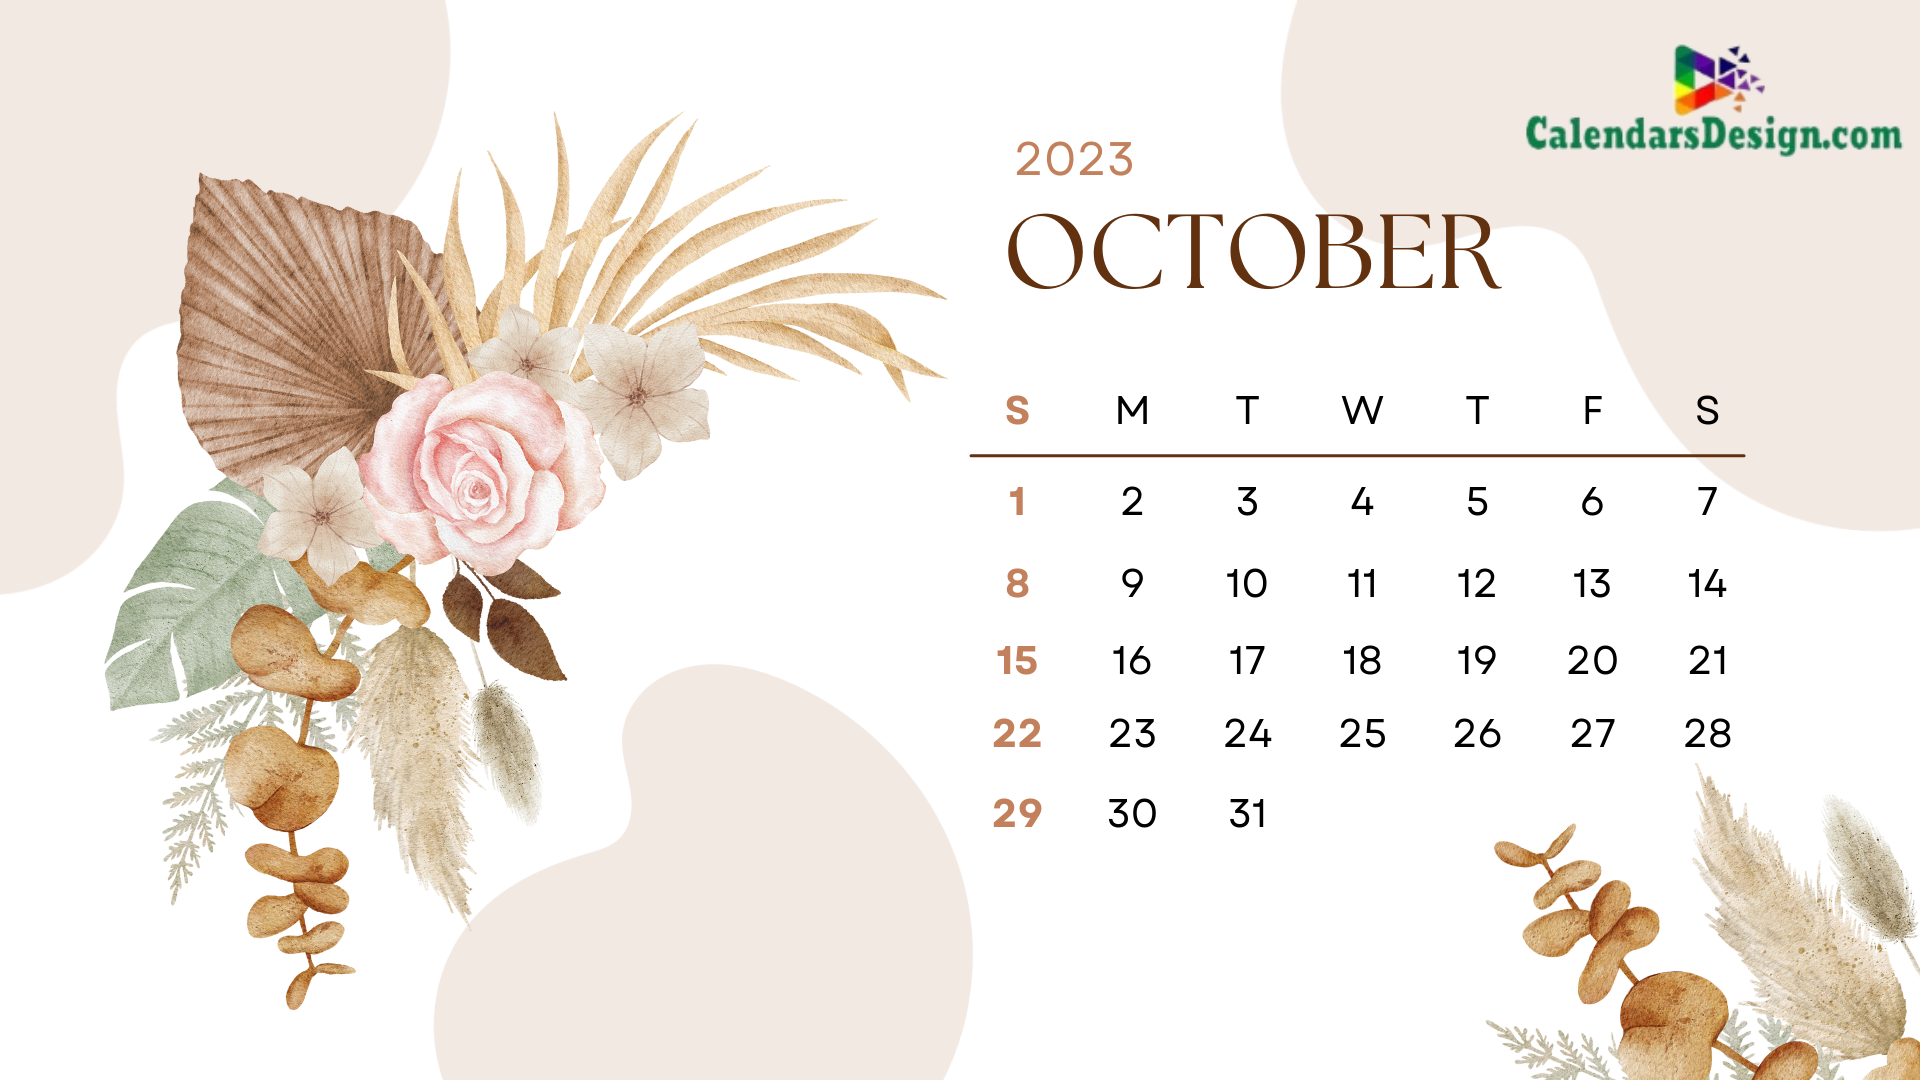 Latest October 2023 Wall Calendar